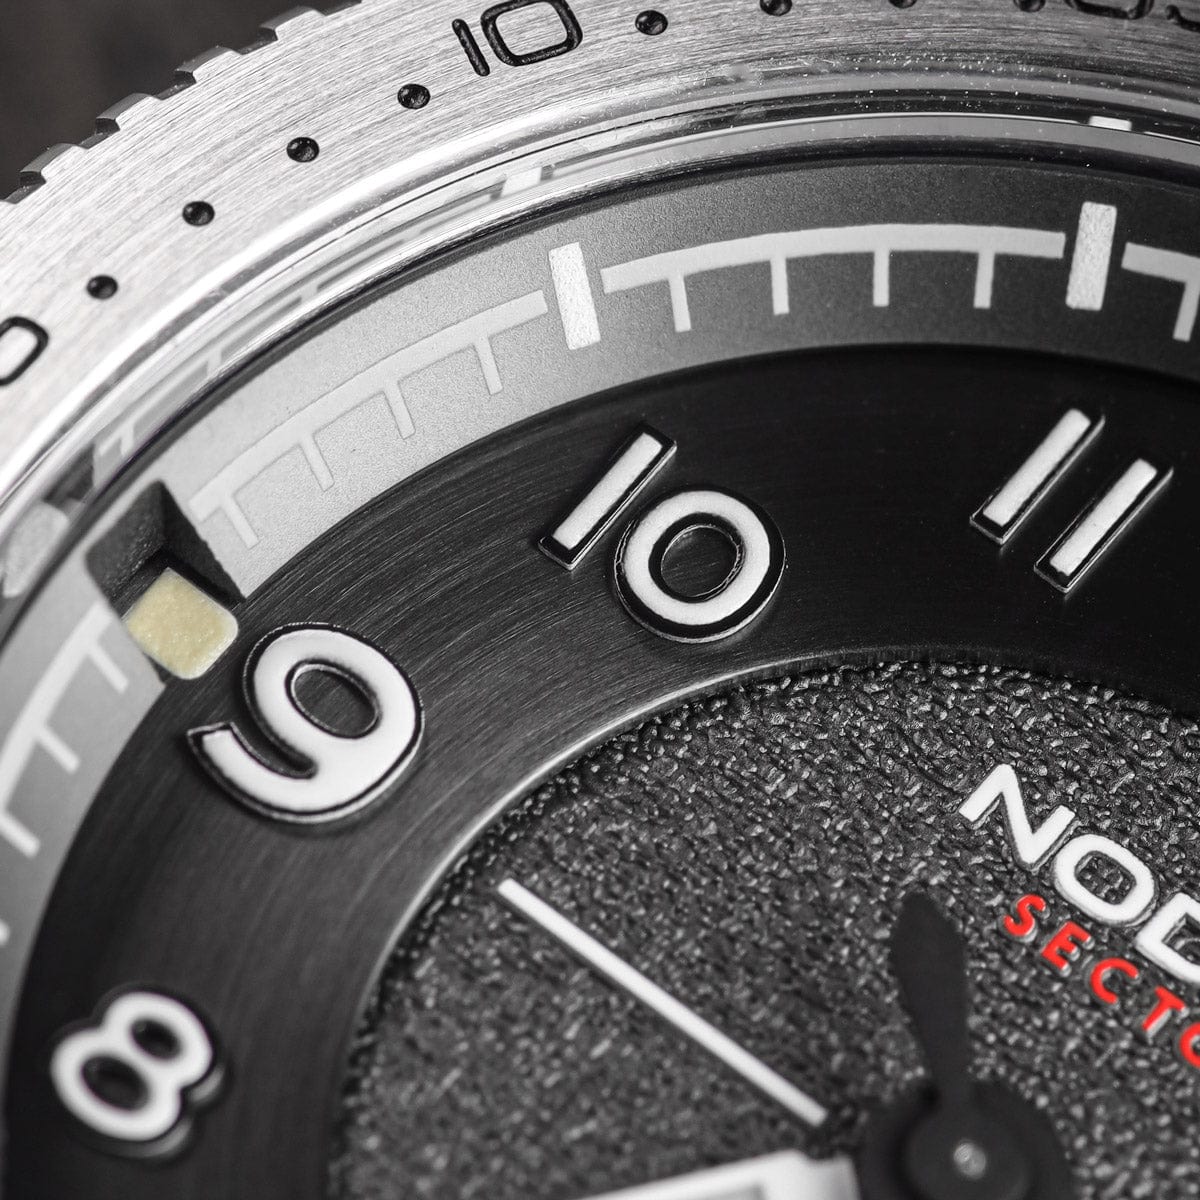 Nodus Sector Pilot Automatic Watch - Corsair Grey - Stainless Steel Bezel - NEARLY NEW